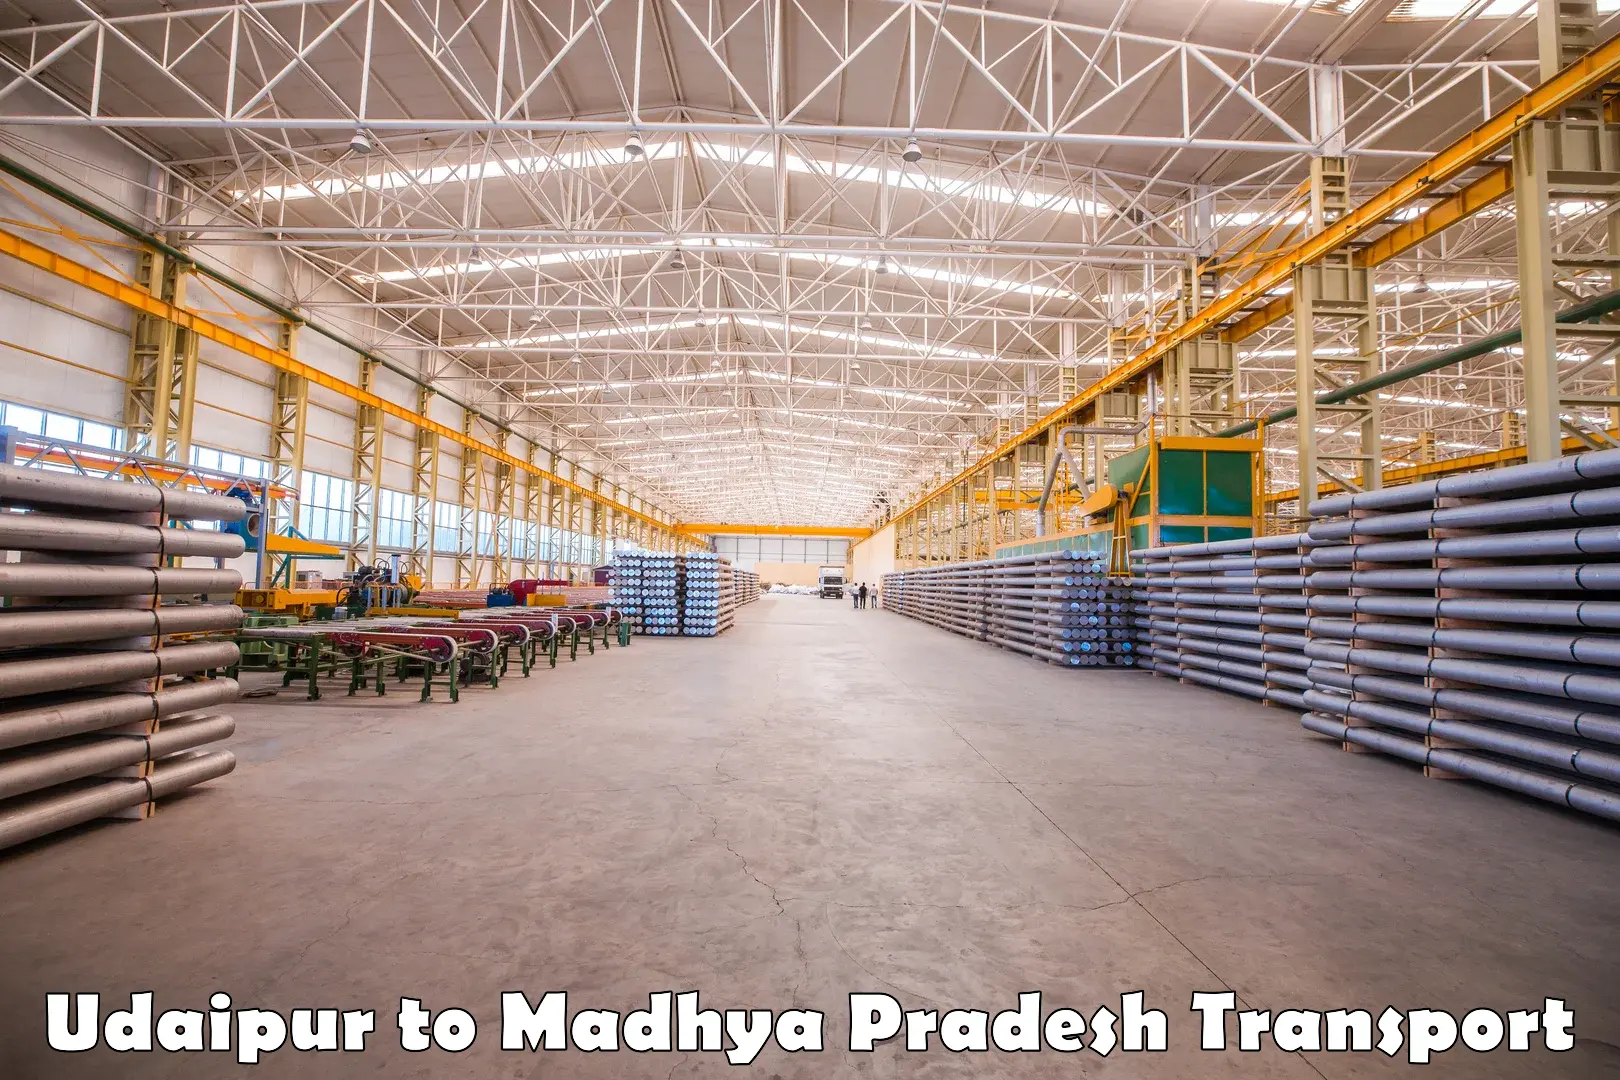 Transport in sharing Udaipur to Mandla